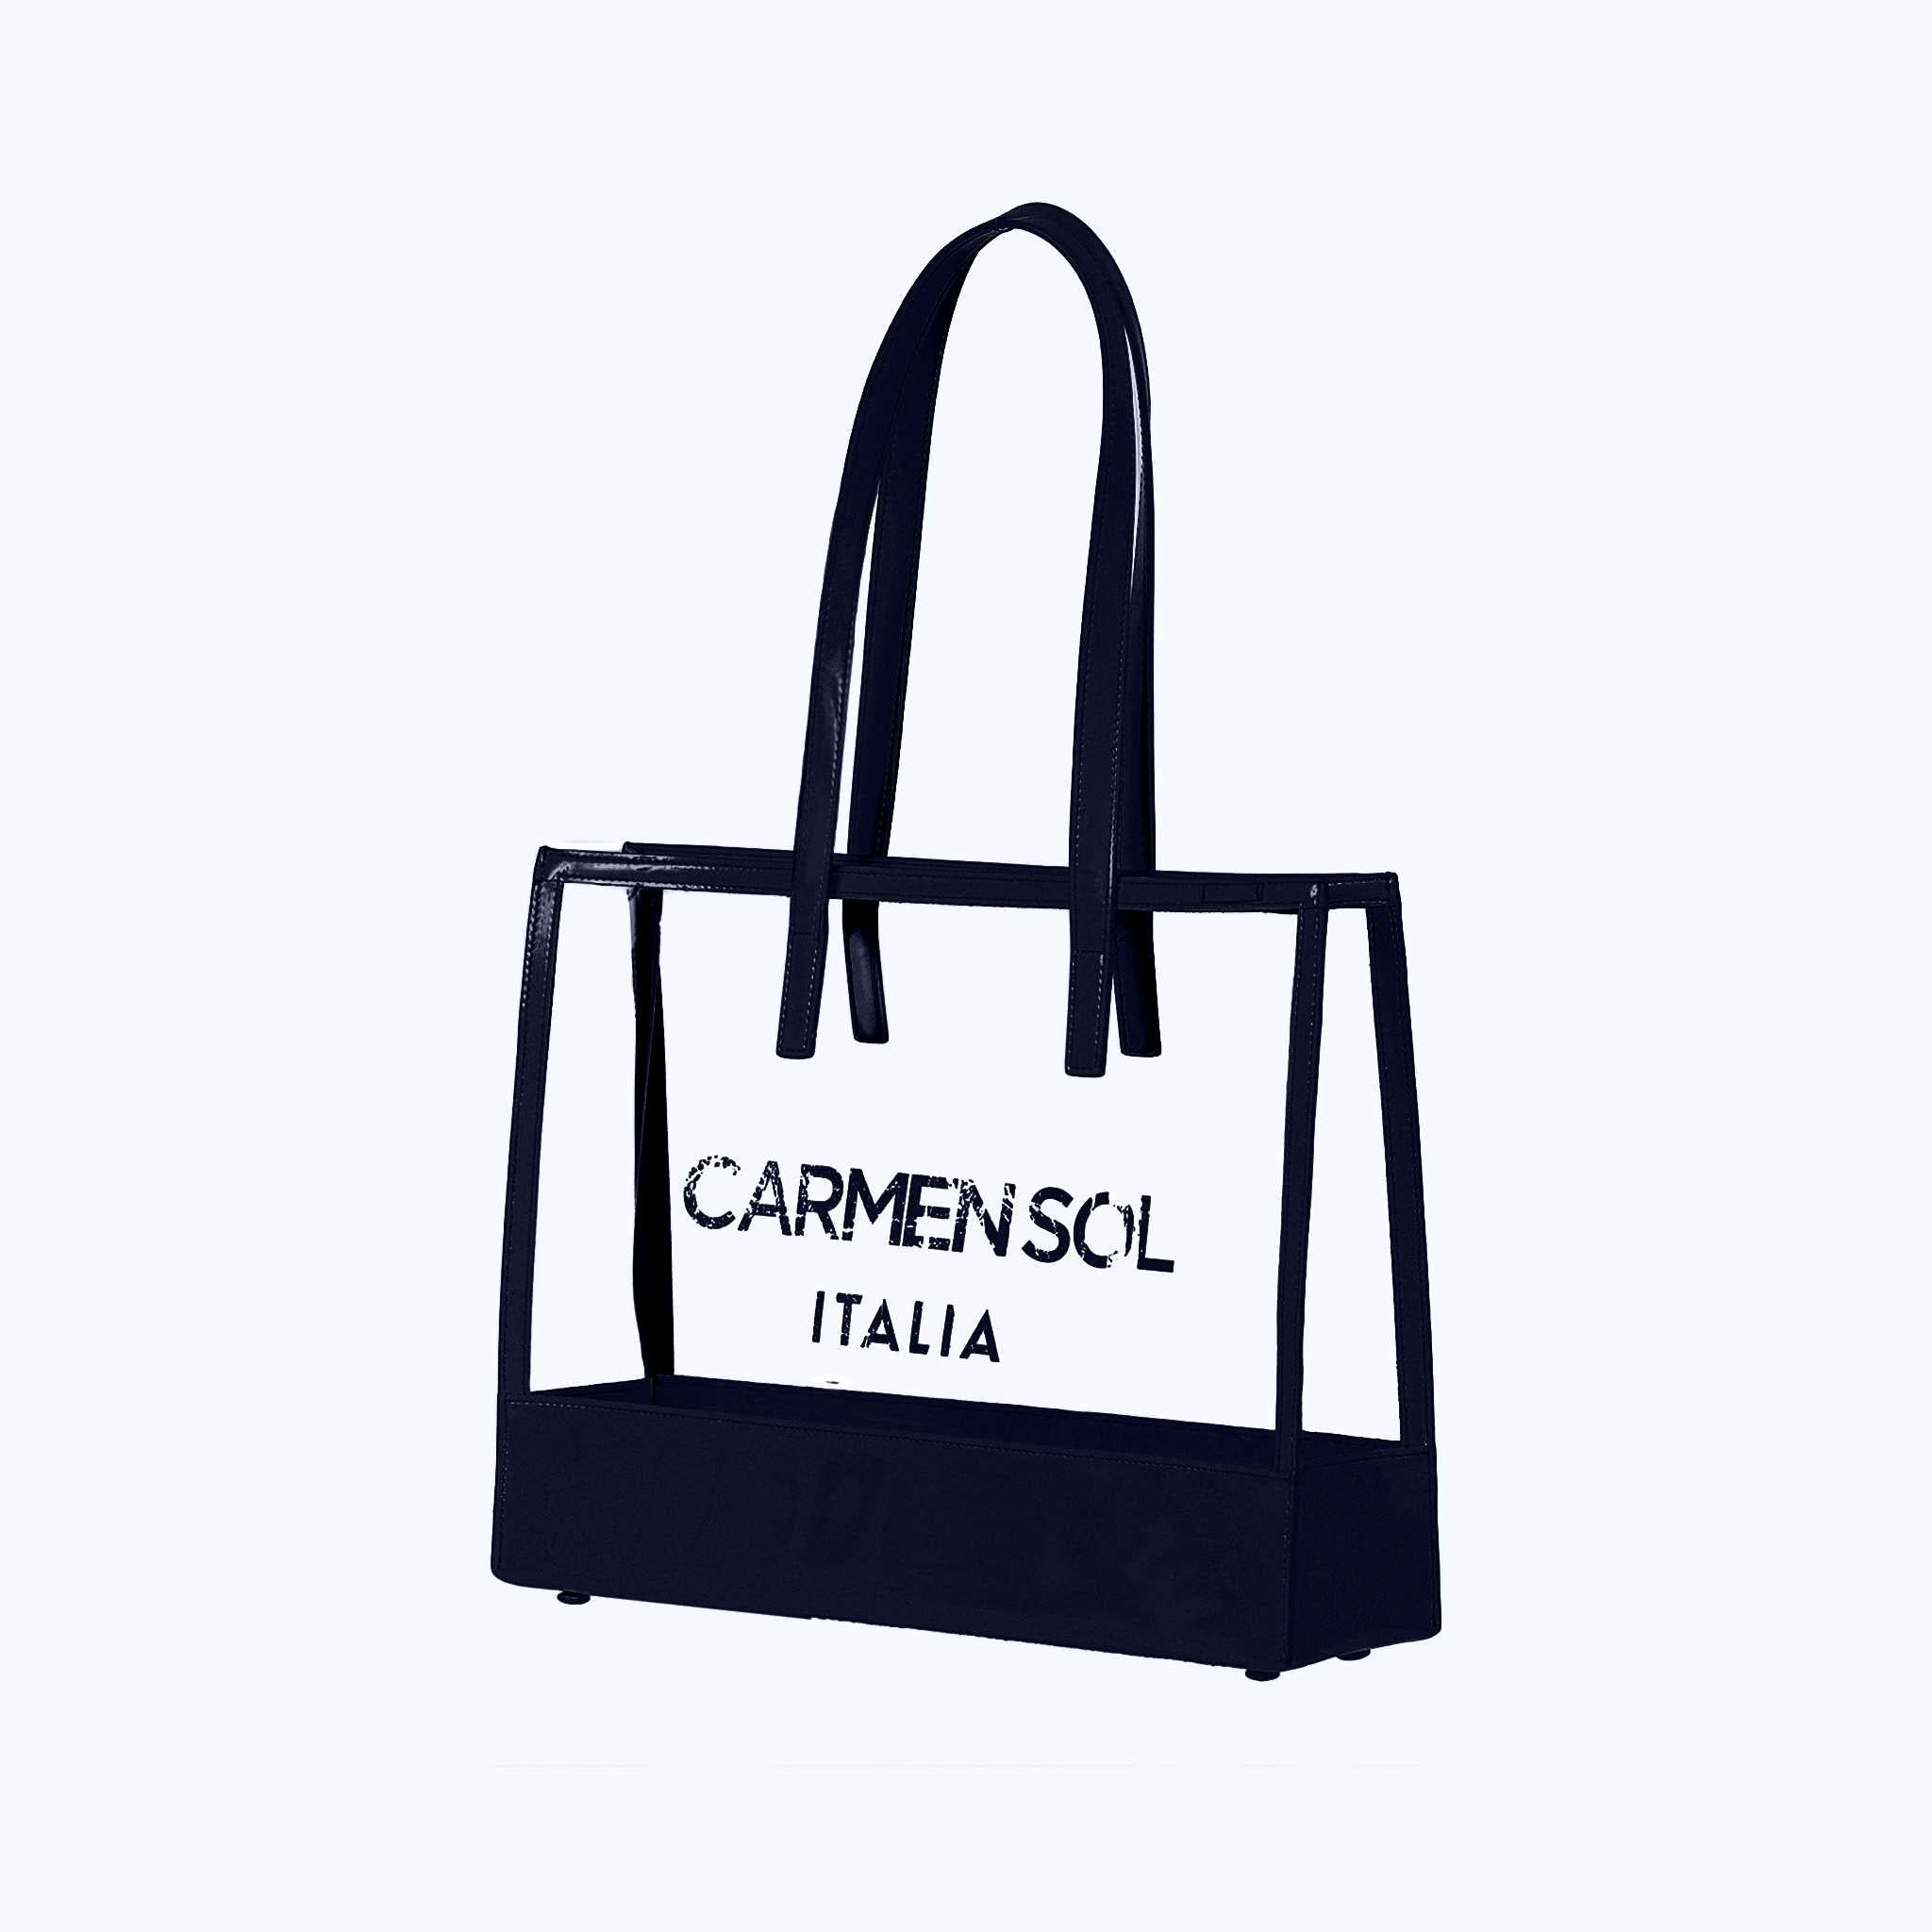 Buy Capri Clear Mini melissa beach purse for women